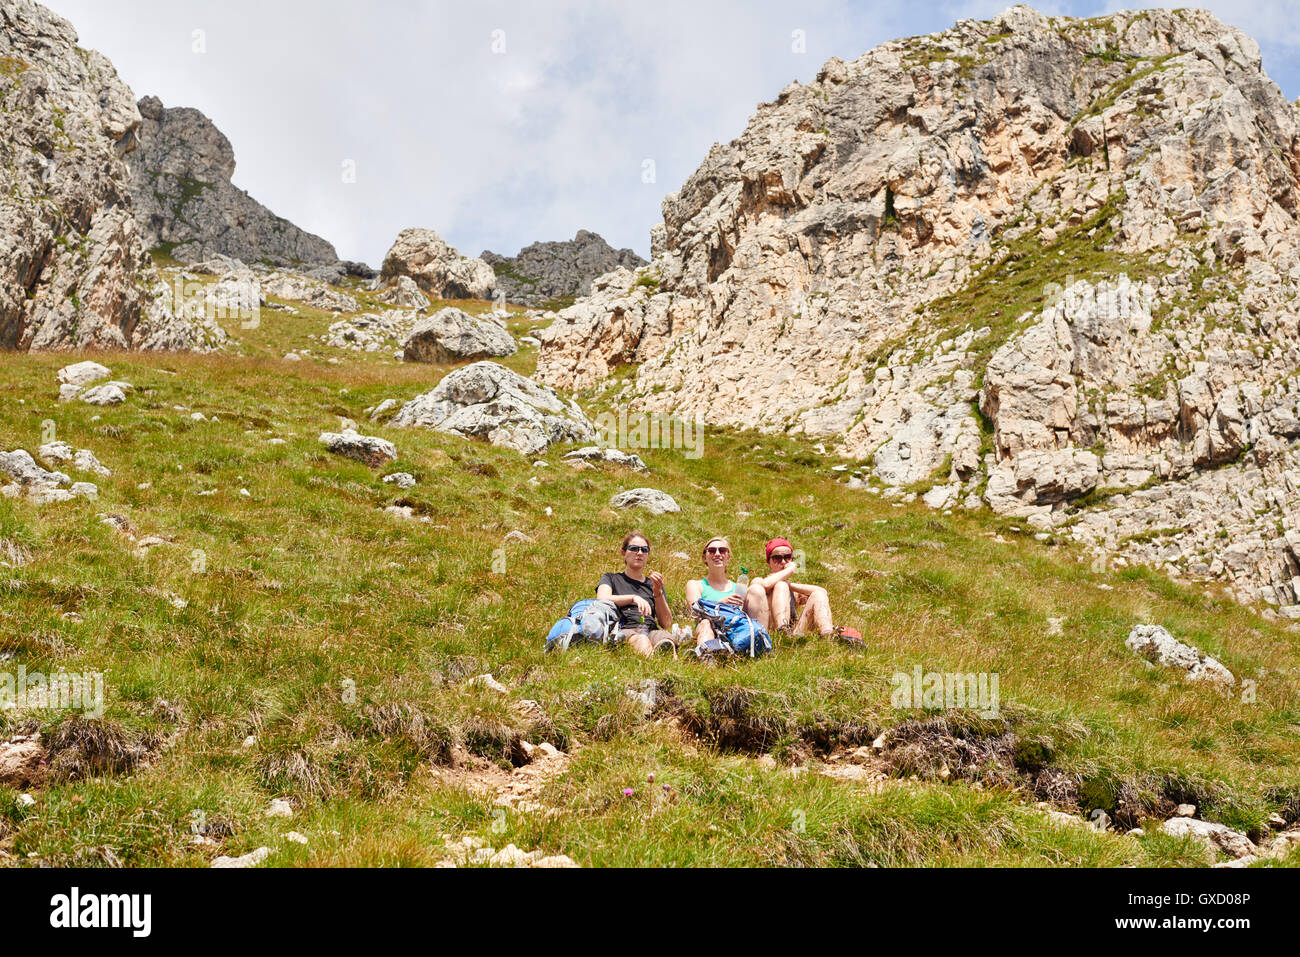 Hikers resting on rocky hillside, Austria Stock Photo